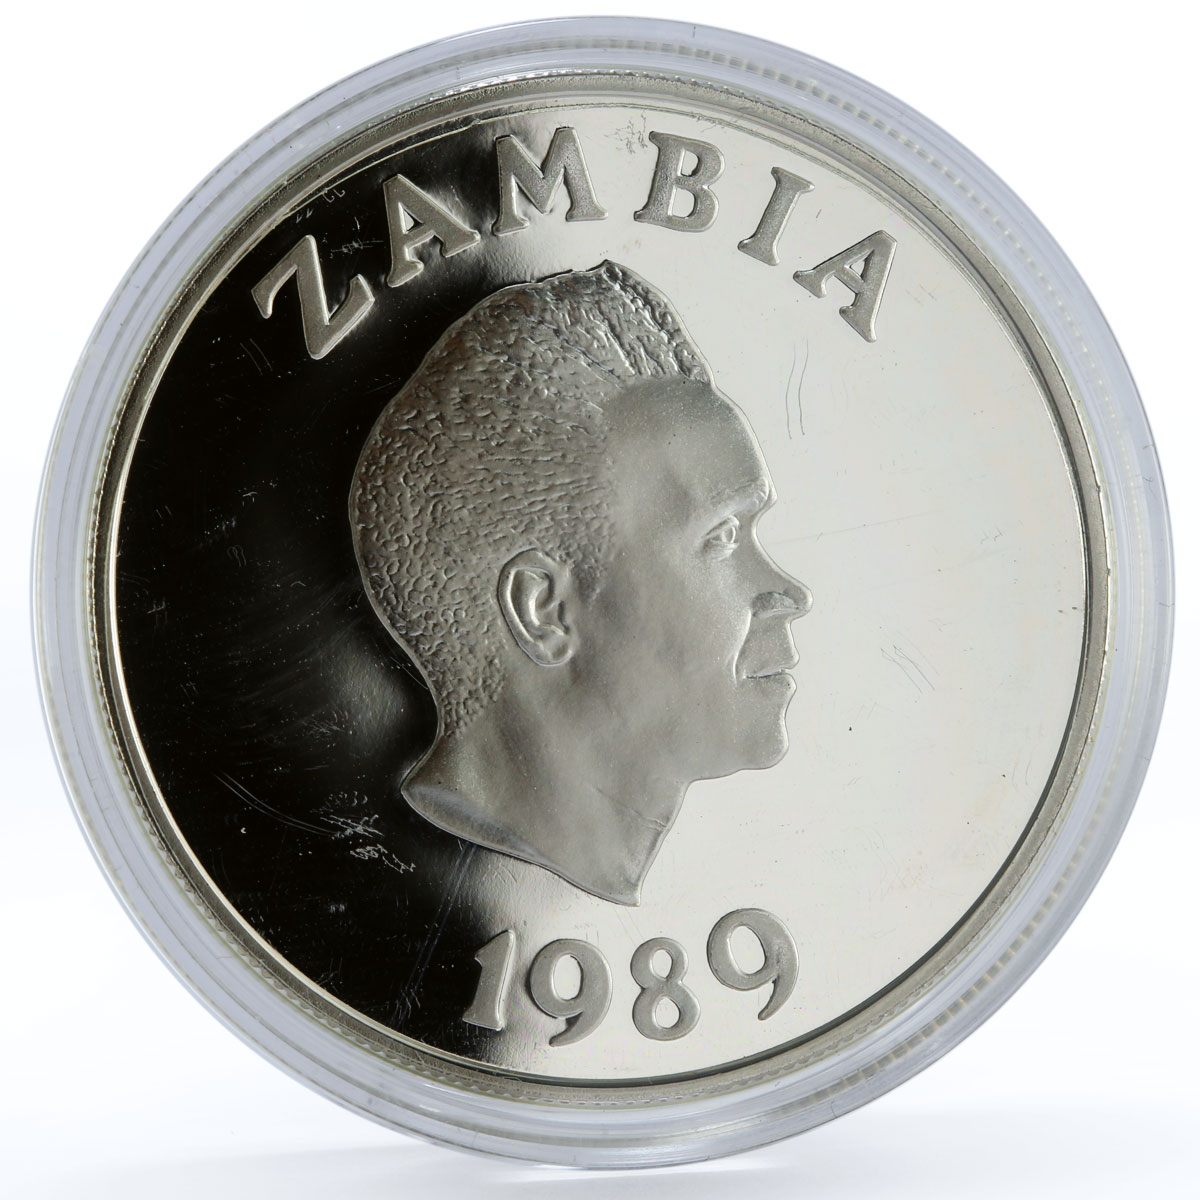 Zambia 10 kwacha International Year of the Child proof silver coin 1989